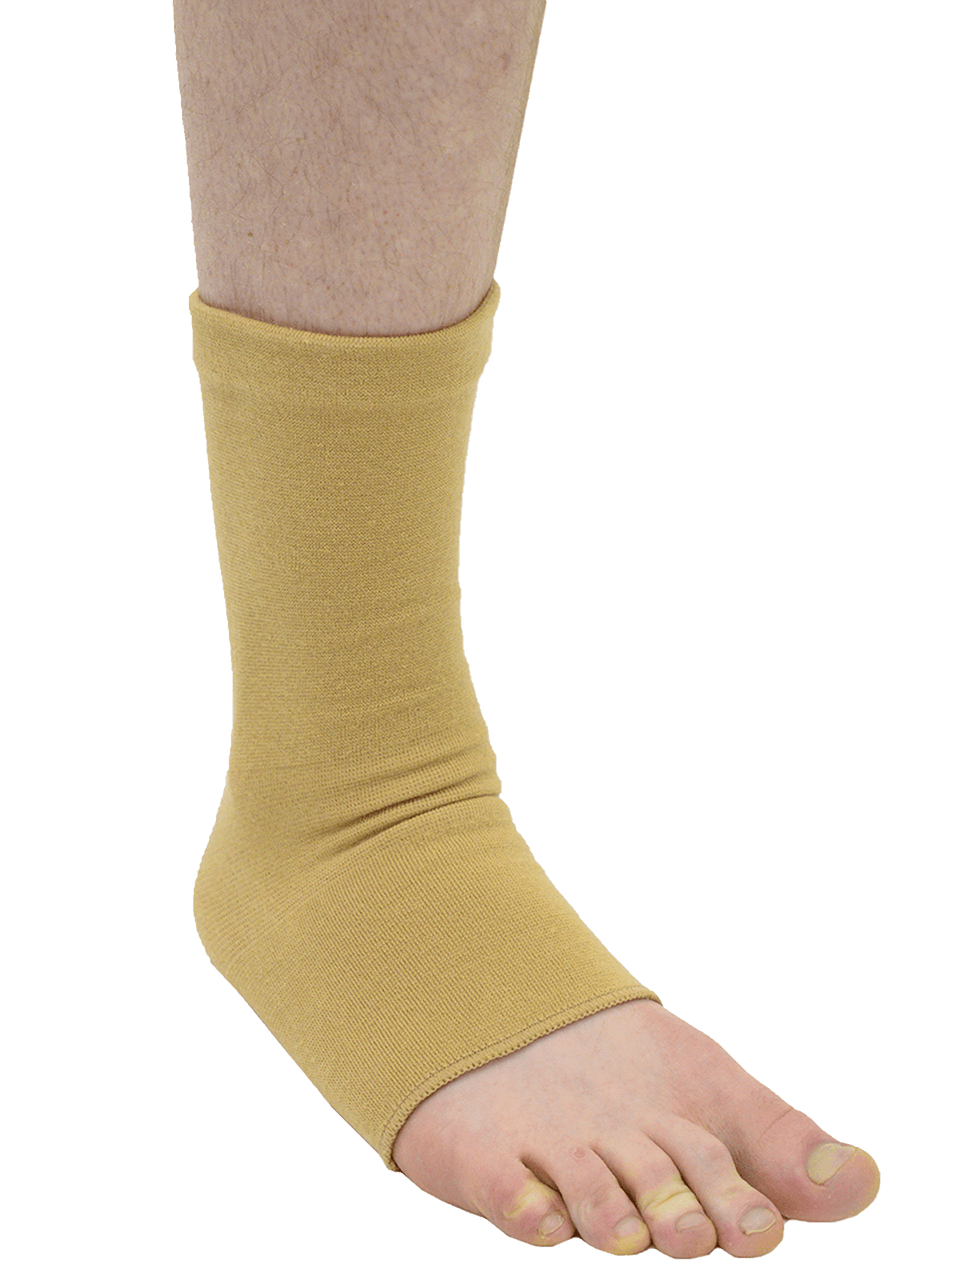 MAXAR Cotton/Elastic Ankle Brace (Four-Way Stretch, 67% Cotton) - Beige - No Insurance Medical Supplies